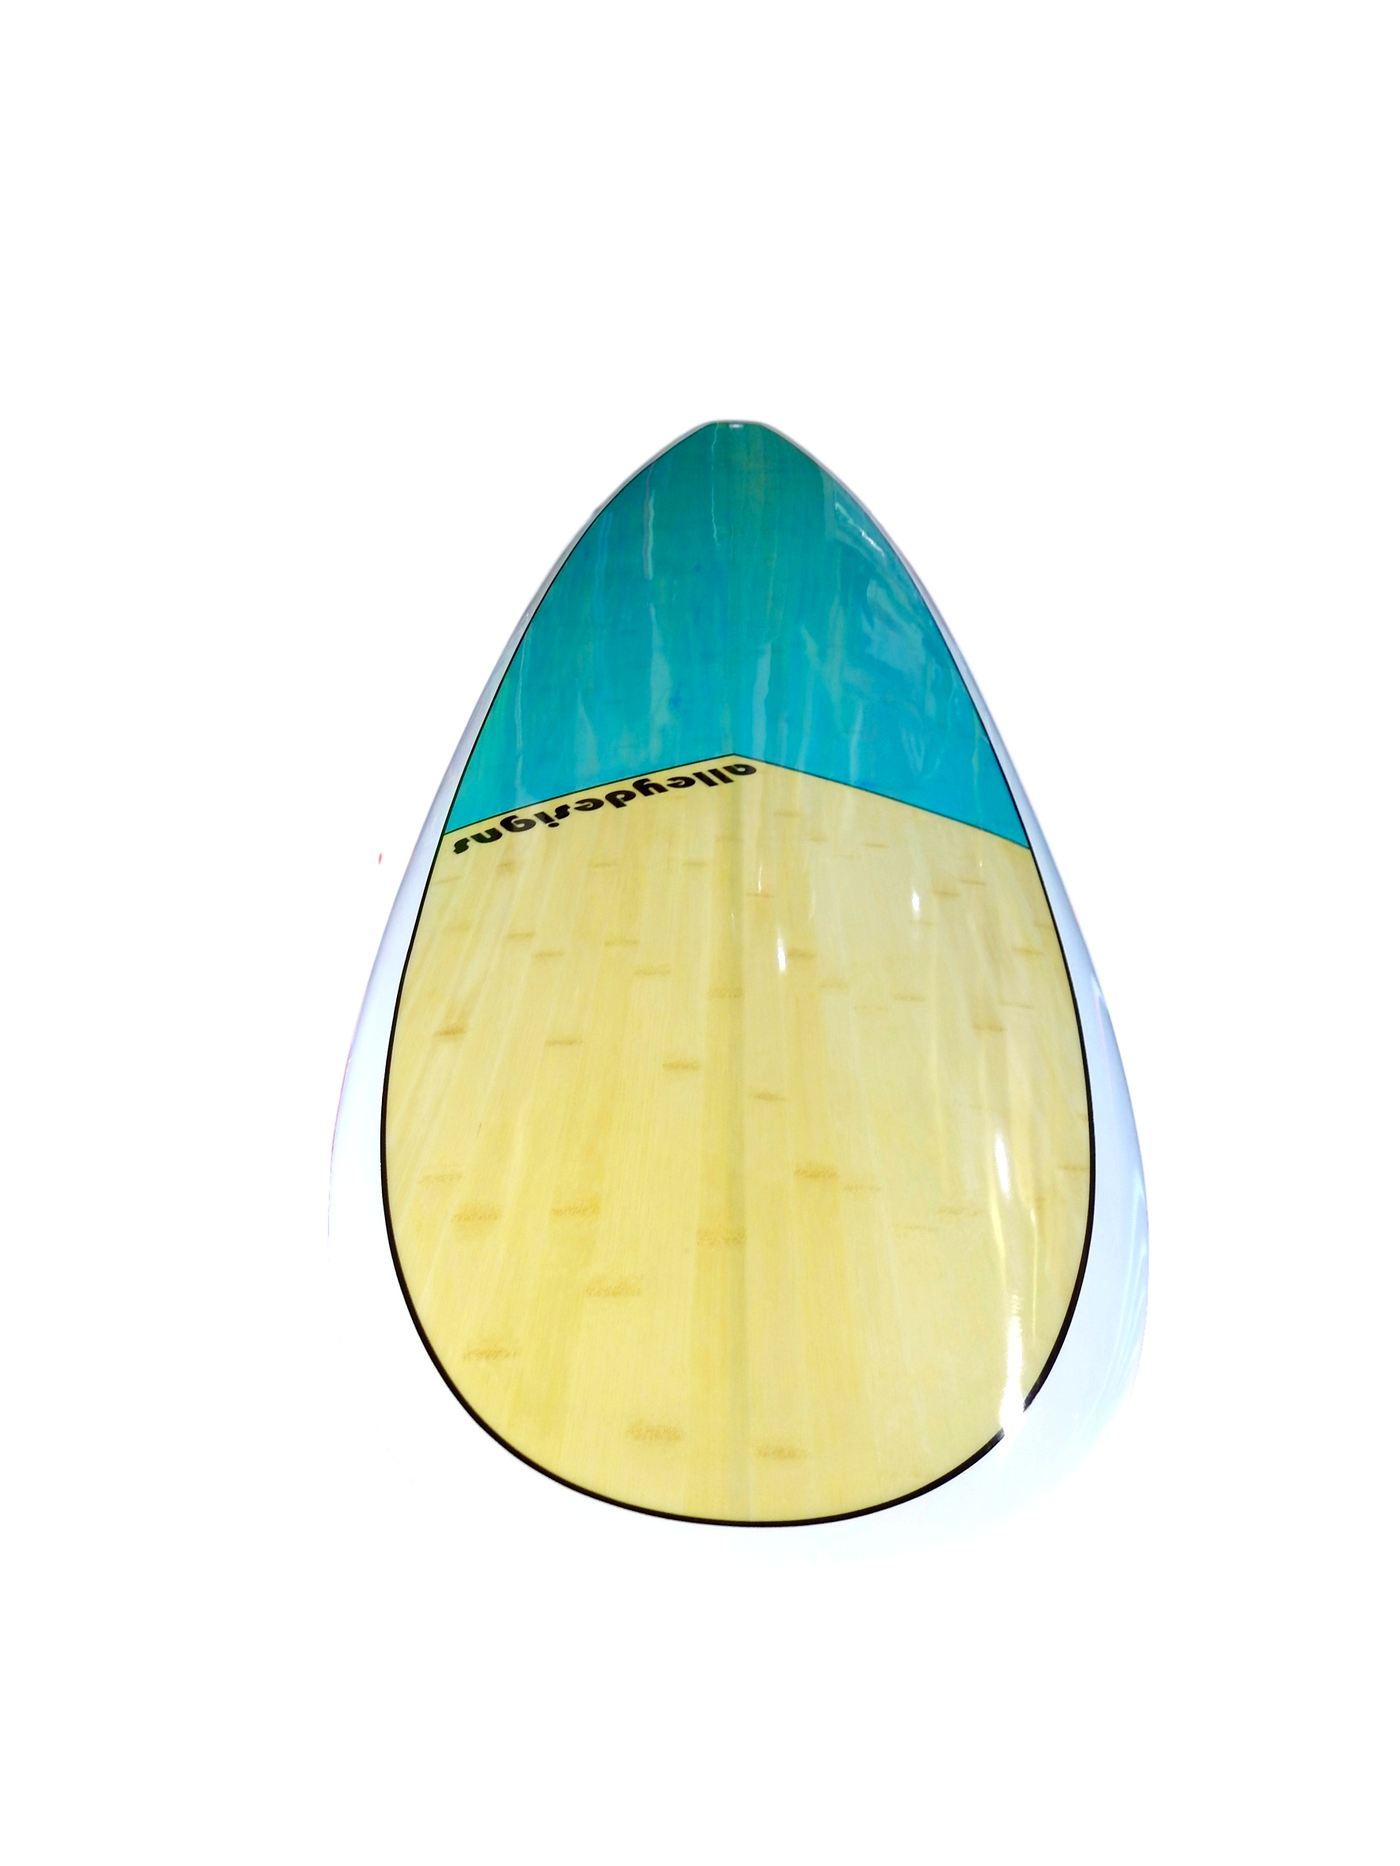 Surfboard 9' "The Sunshine Underground" Bamboo Epoxy Aqua, FREE BAG + LEASH + FINS & WAX WORTH $150 - Alleydesigns  Pty Ltd                                             ABN: 44165571264